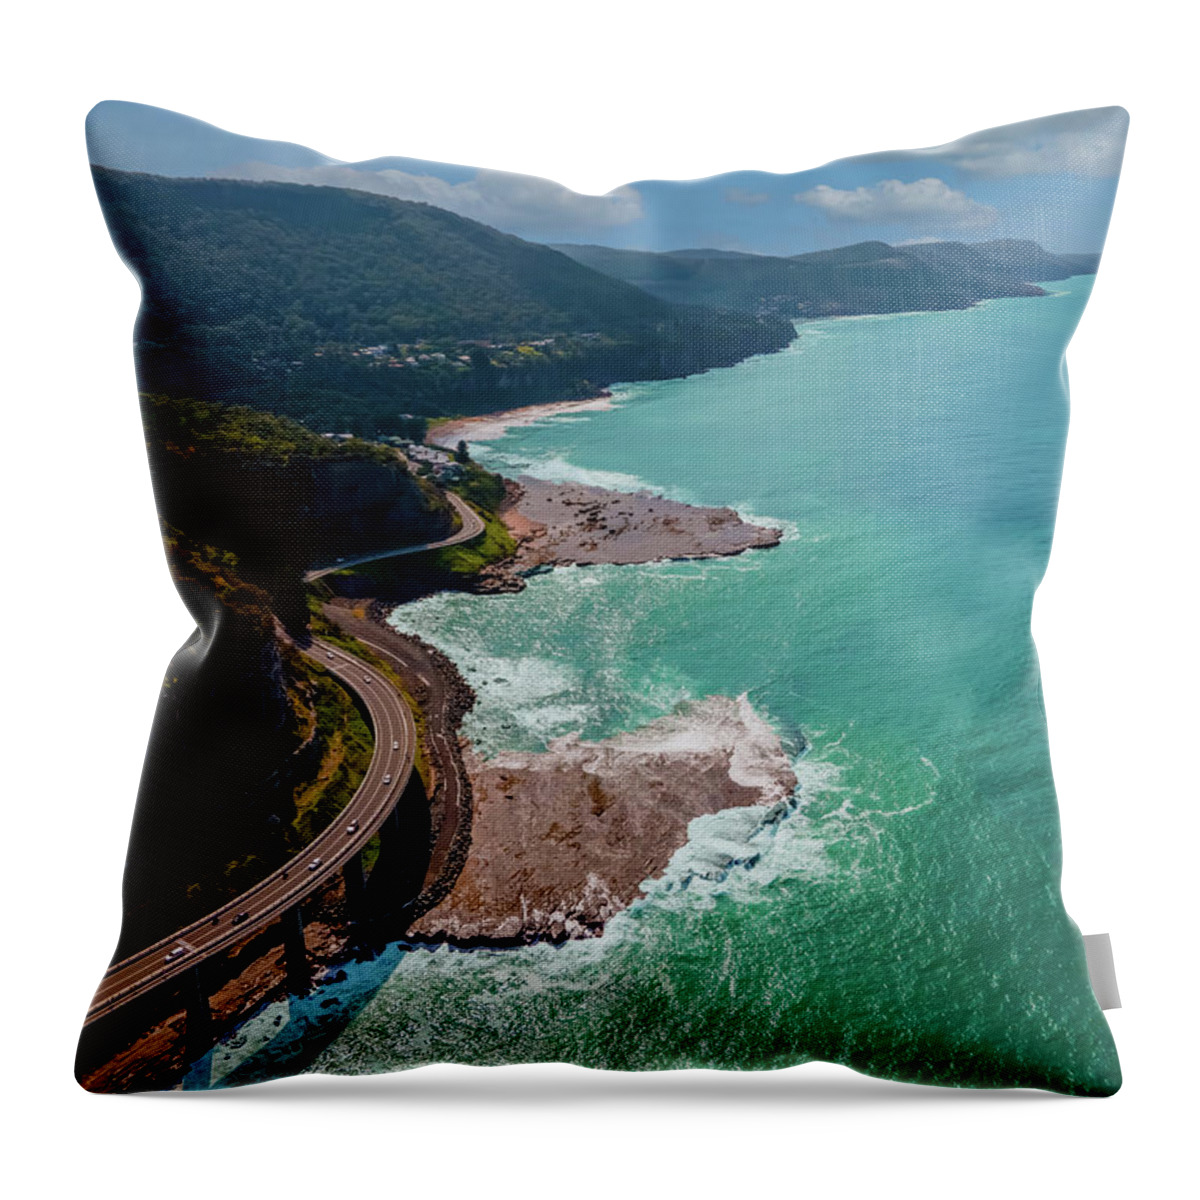 Bridge Throw Pillow featuring the photograph Sea Cliff Bridge No 6 by Andre Petrov